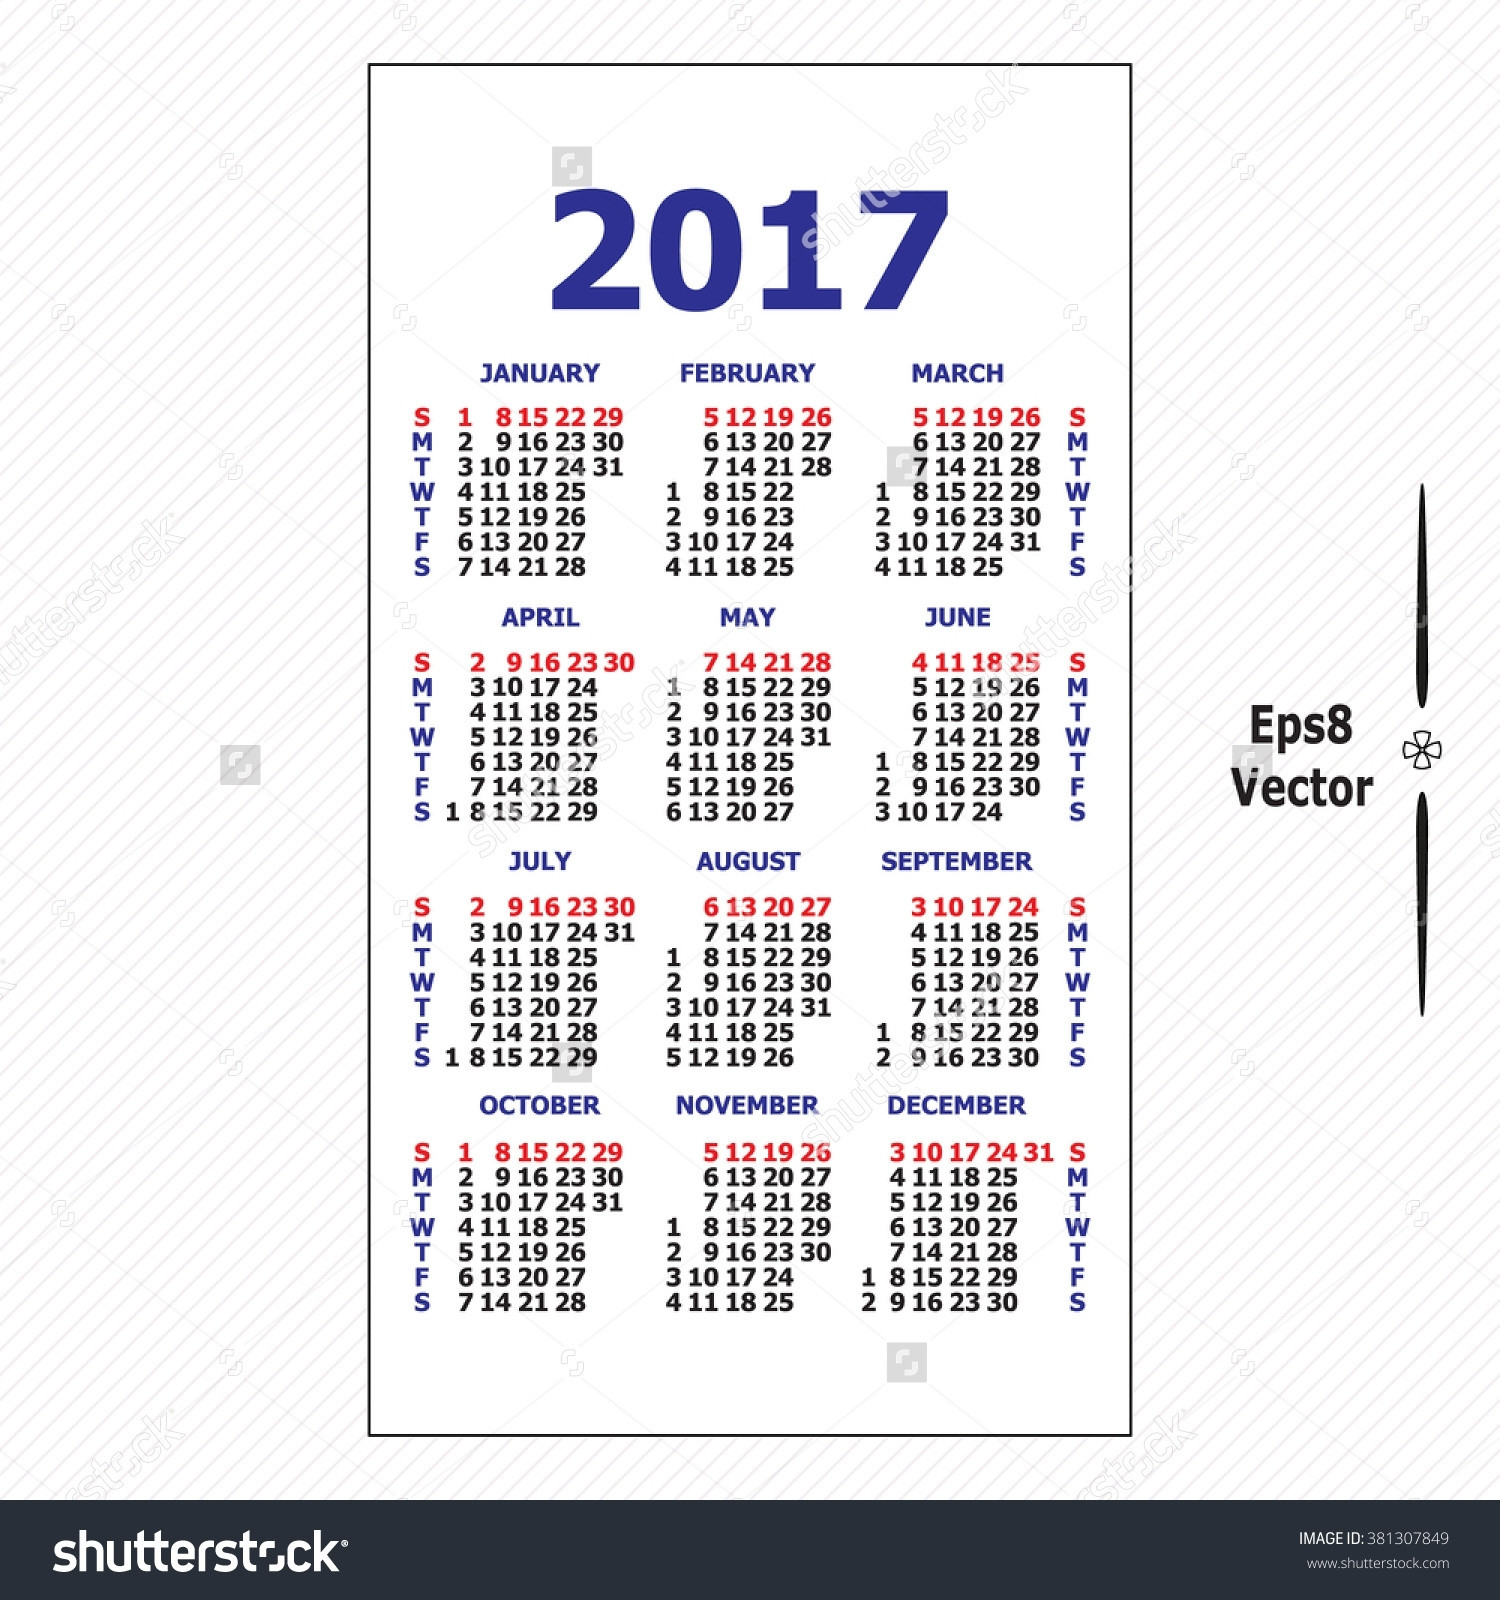 Template For Pocket Sized Calendar - Calendar Inspiration  Free Printable Pocket Size Calendars